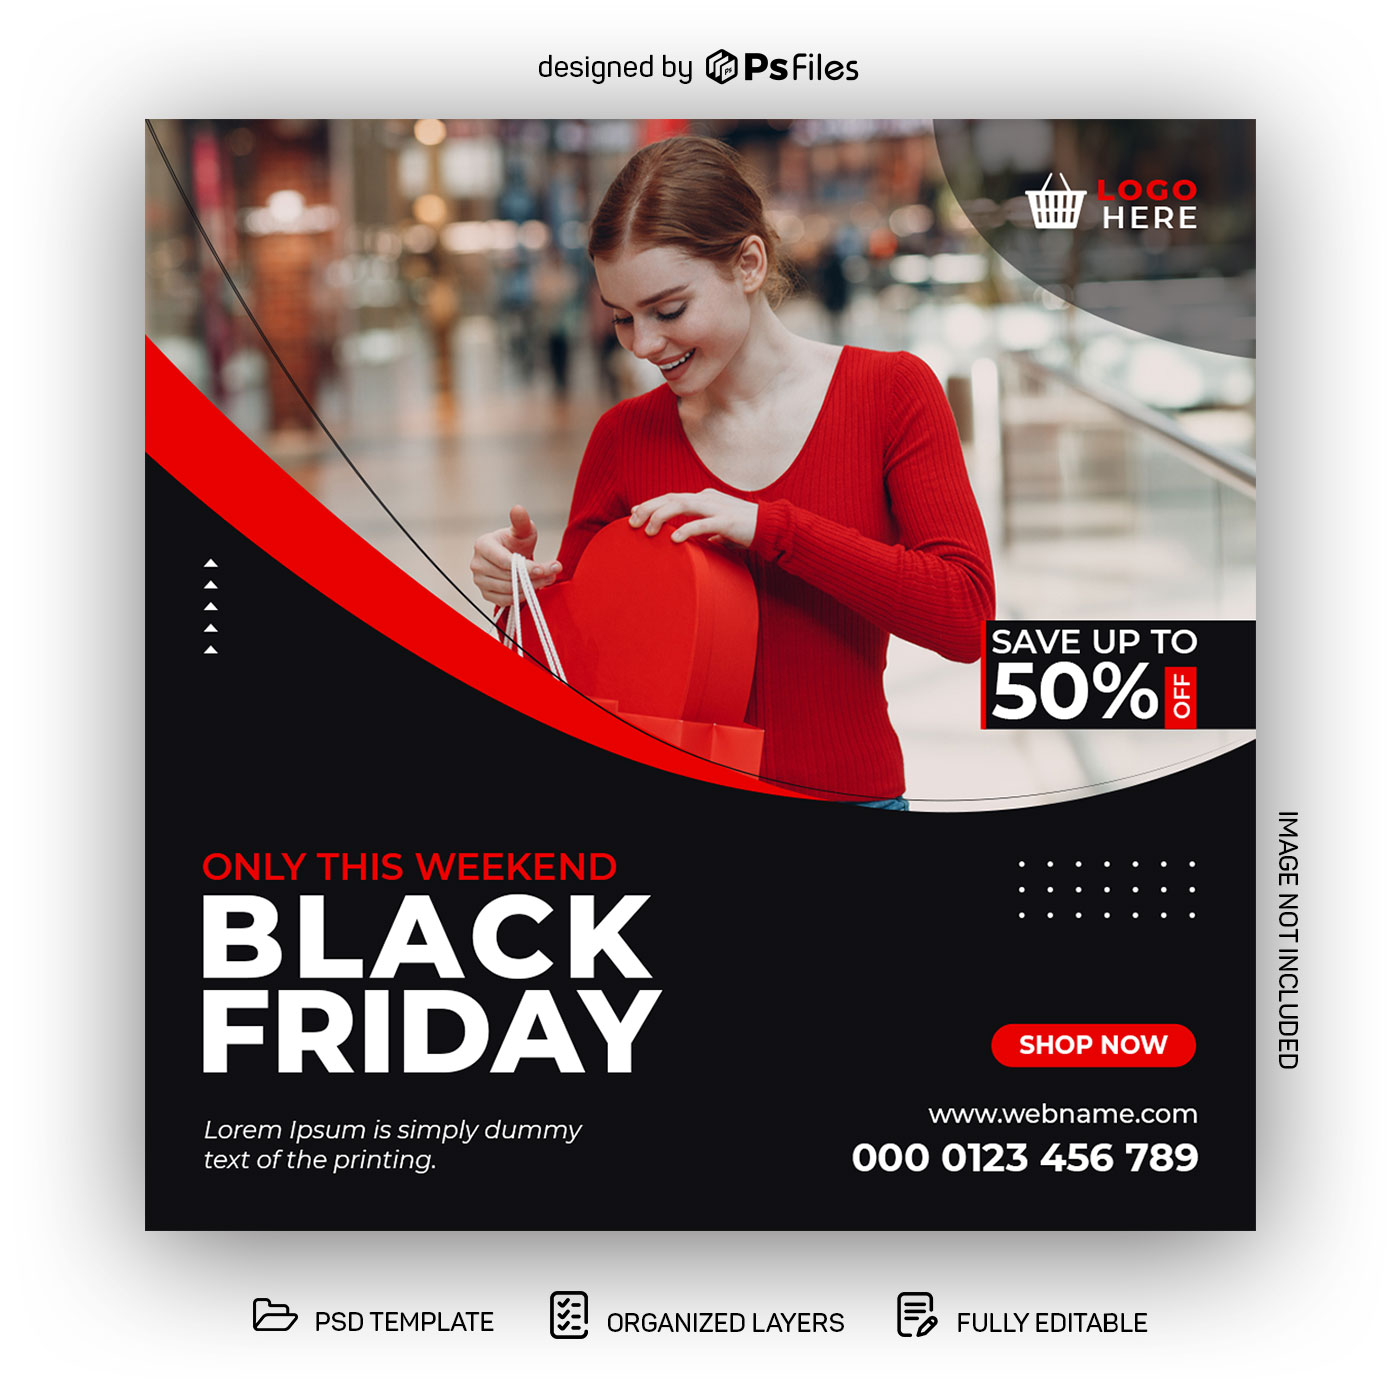 Black Friday Sales Free Social Media Post Design PSD Template